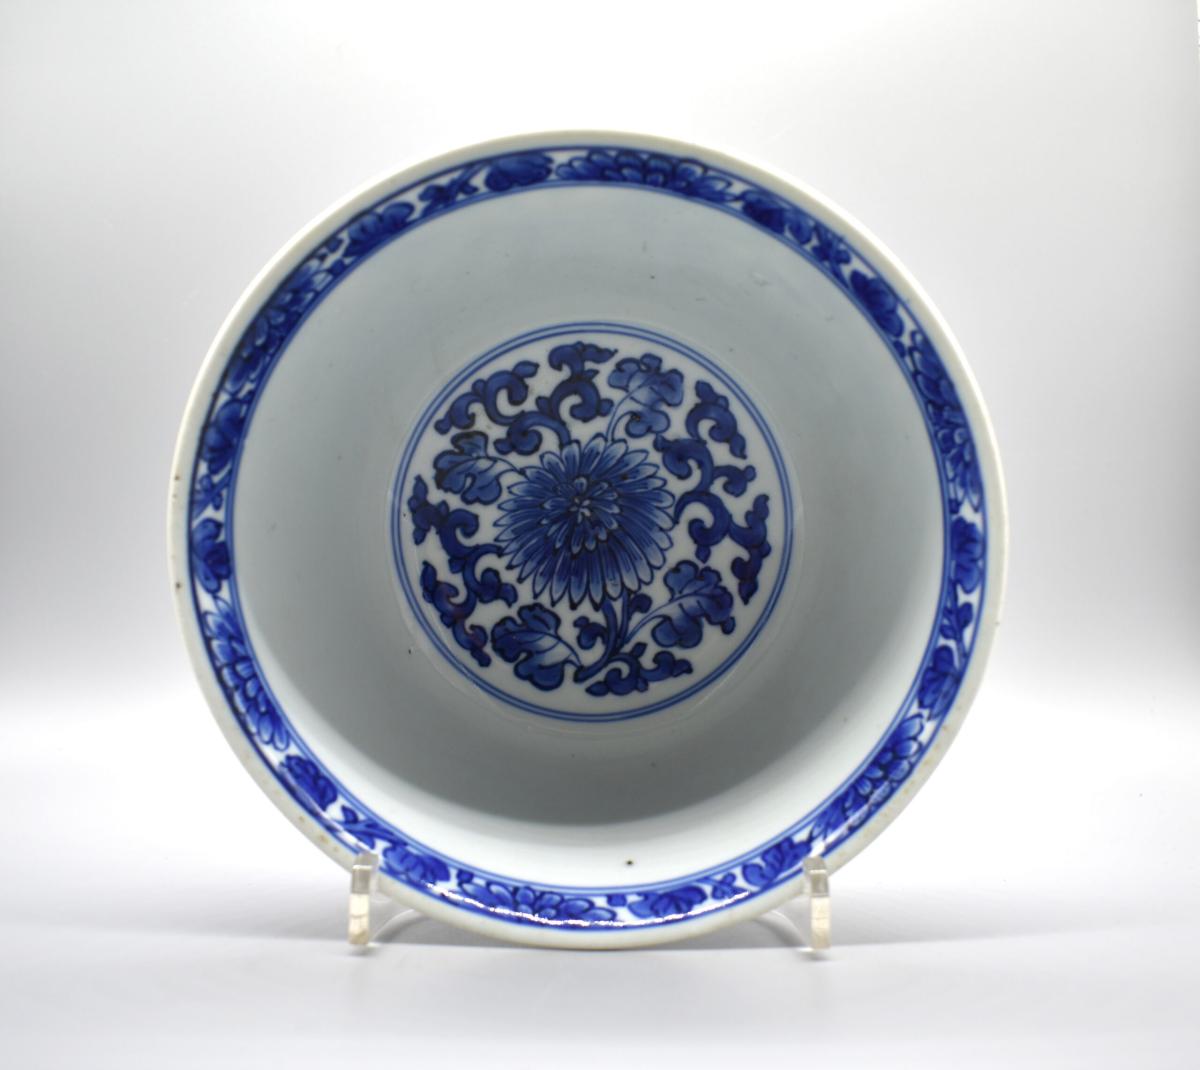 Pair of Kangxi Blue and White Chrysanthemum Decorated Bowls